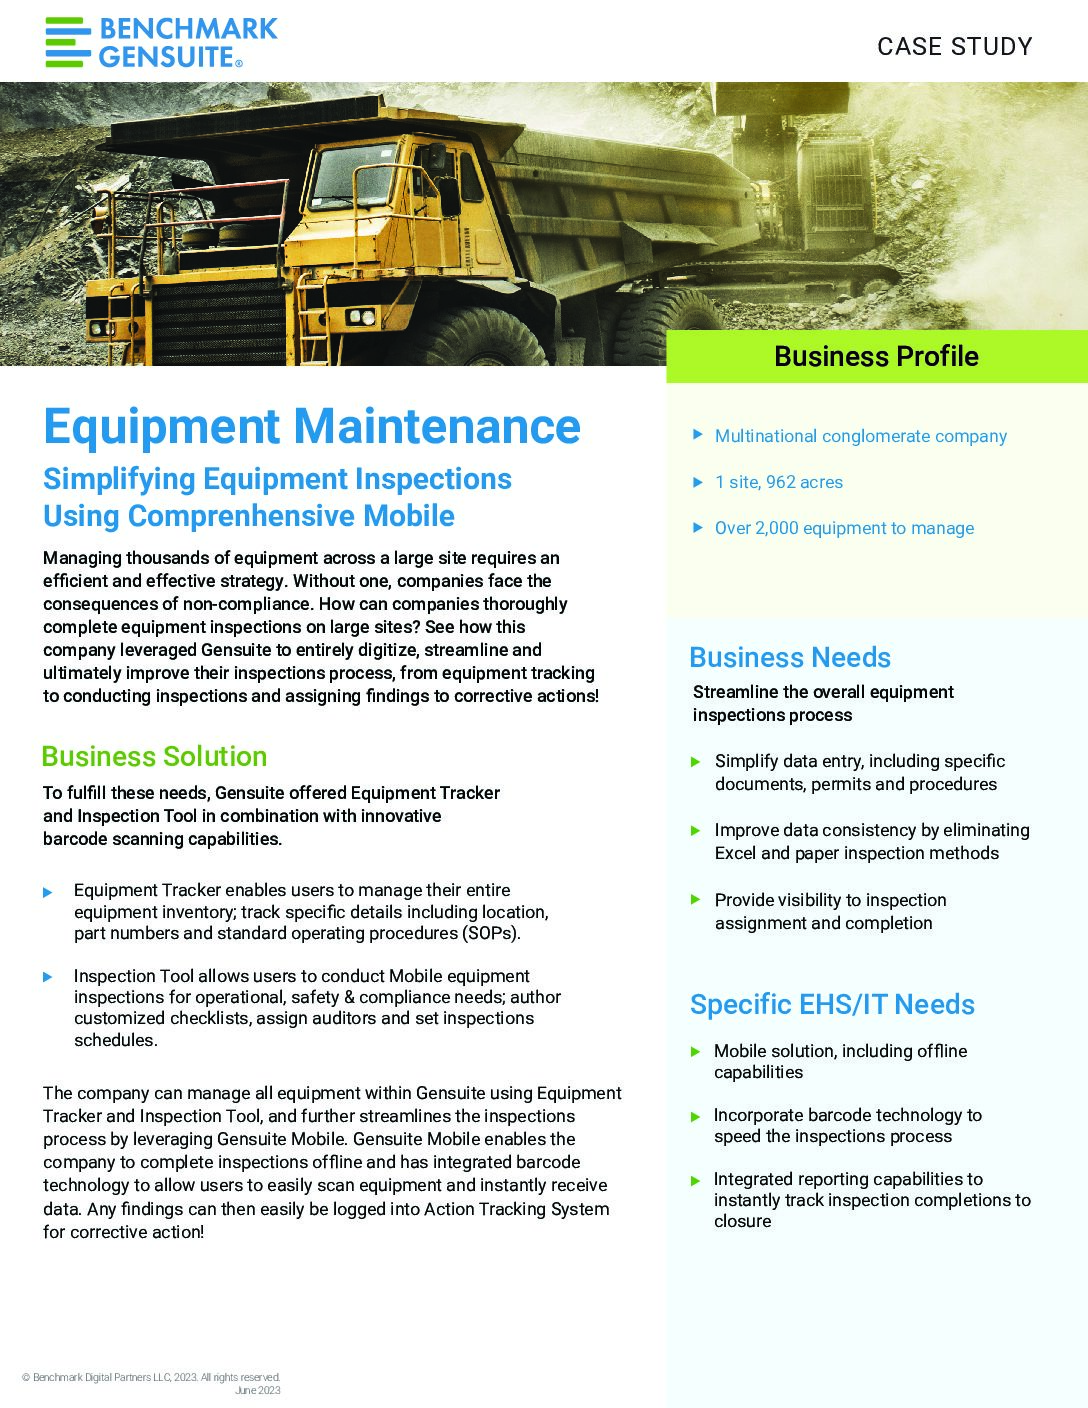 Equipment Maintenance Mobile Inspections Mining